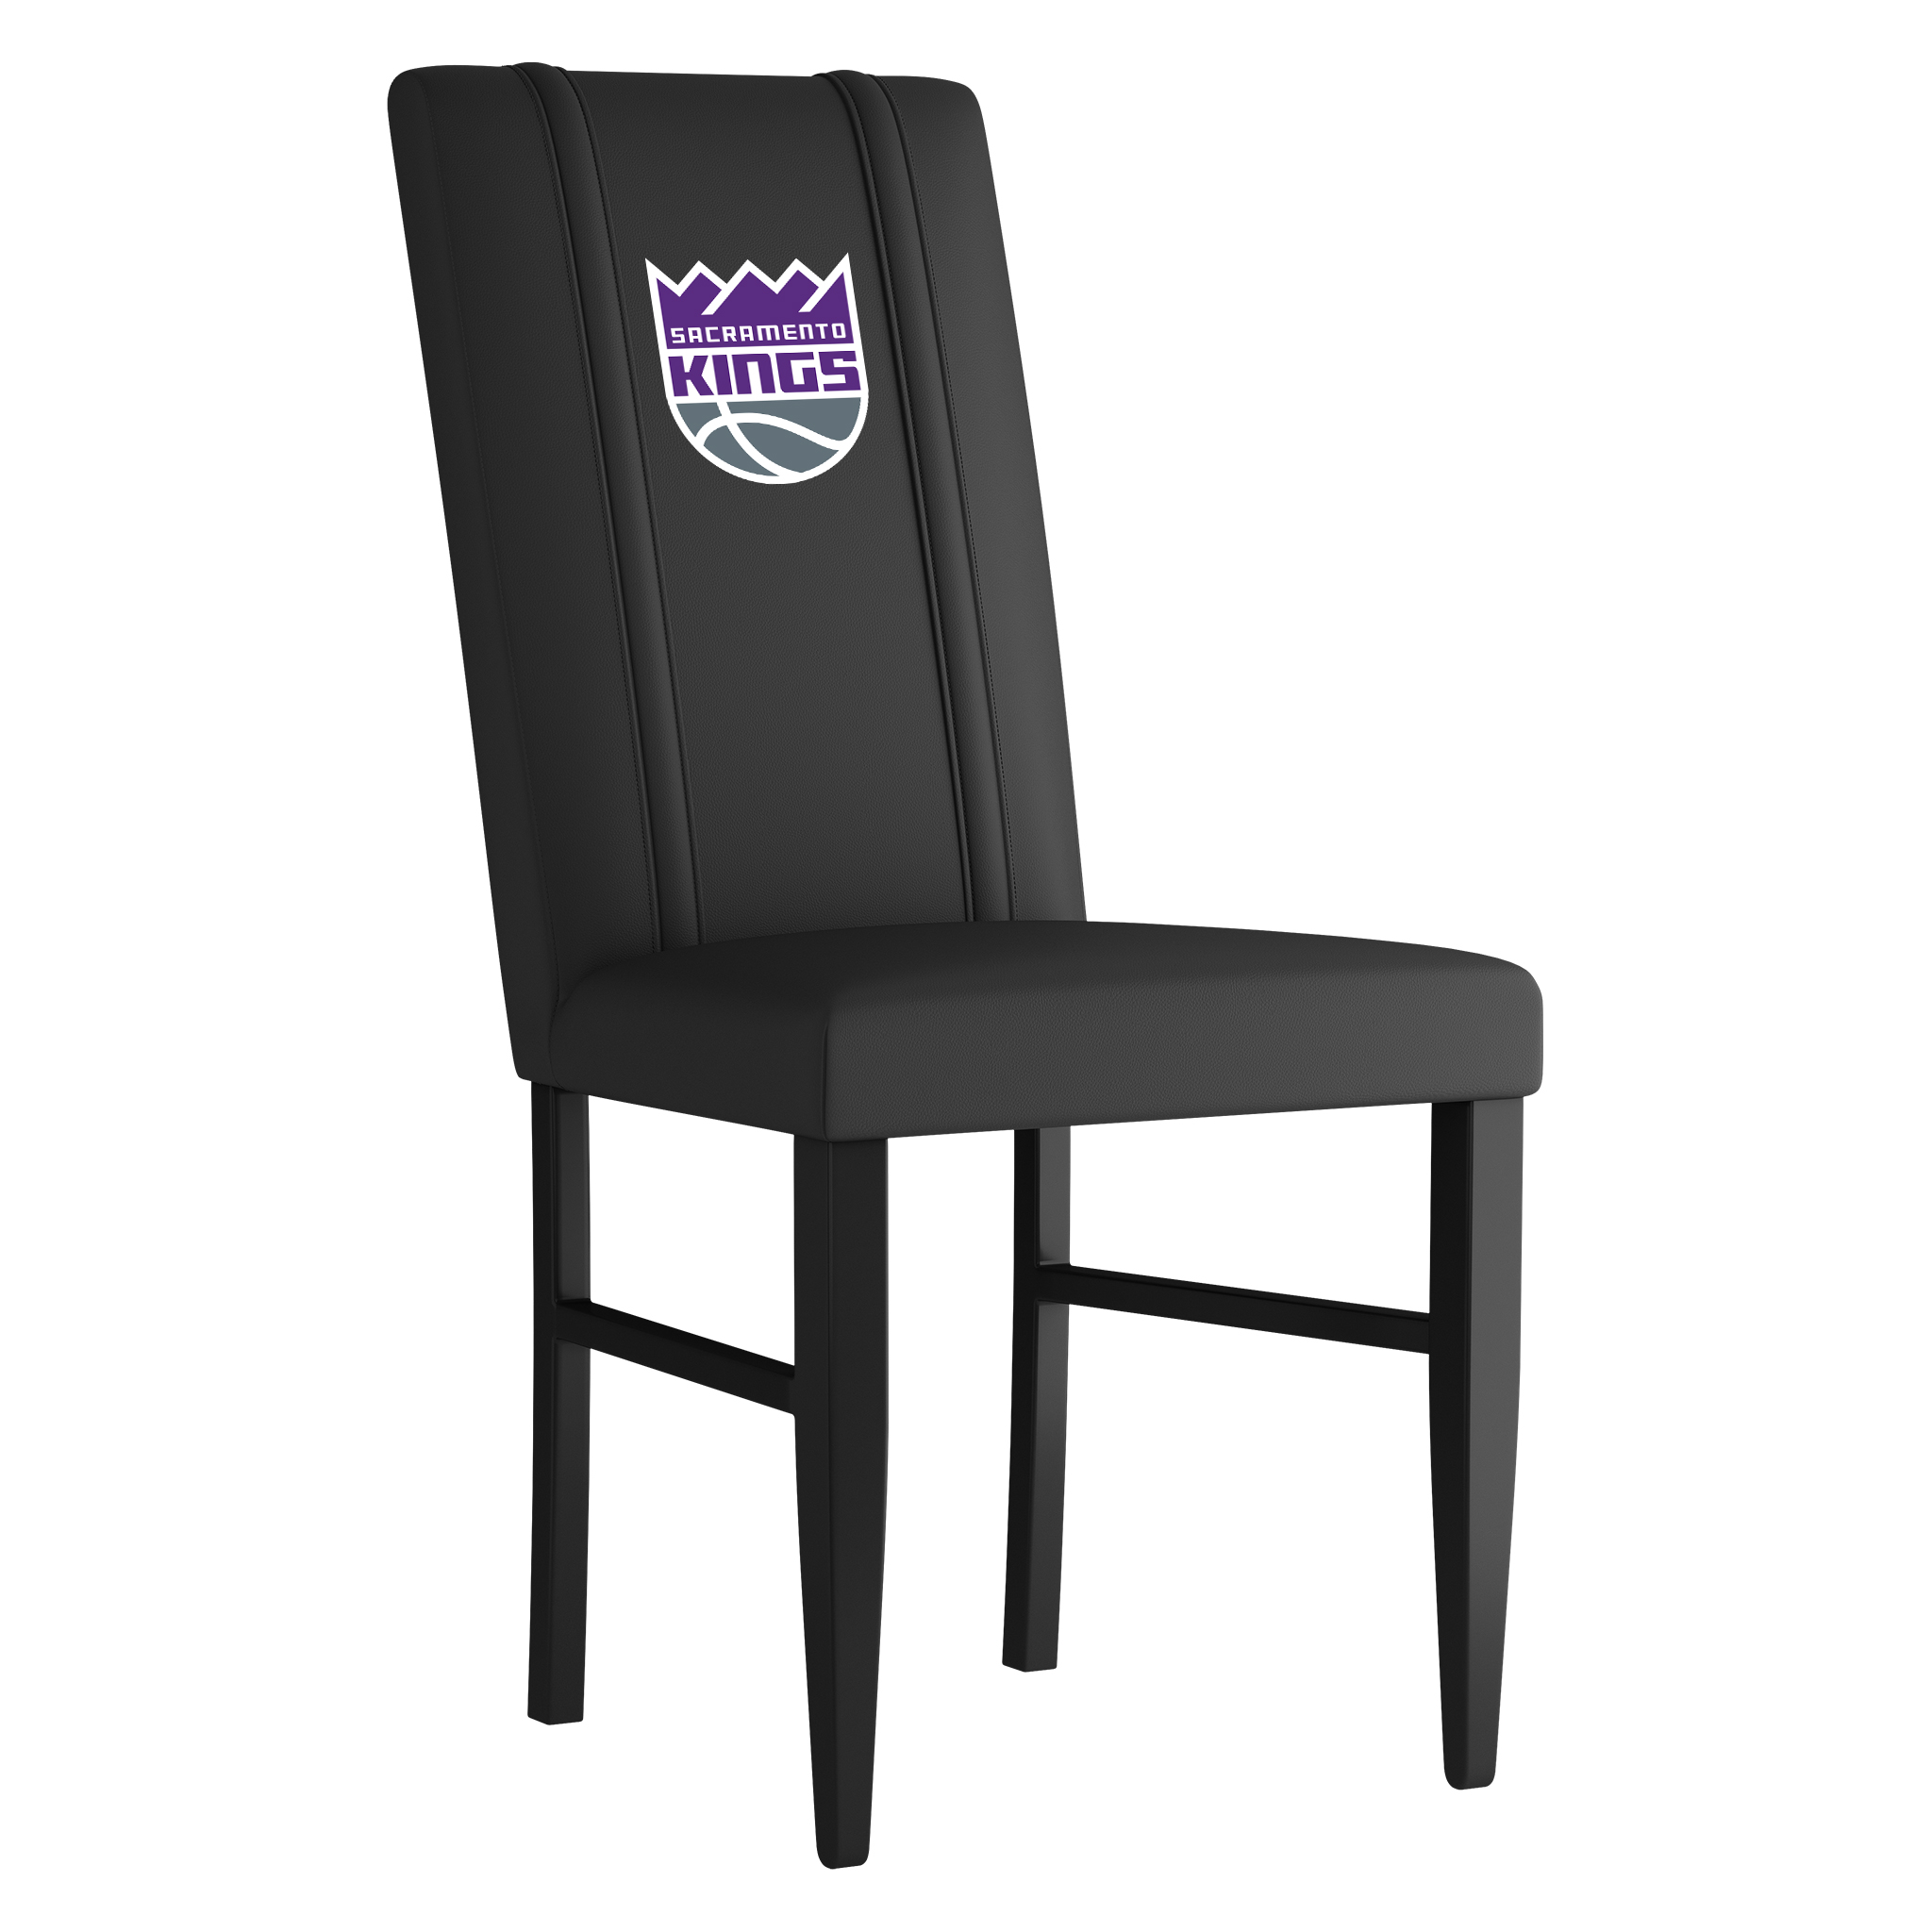 Sacramento Kings Side Chair 2000 With Sacramento Kings Primary Logo